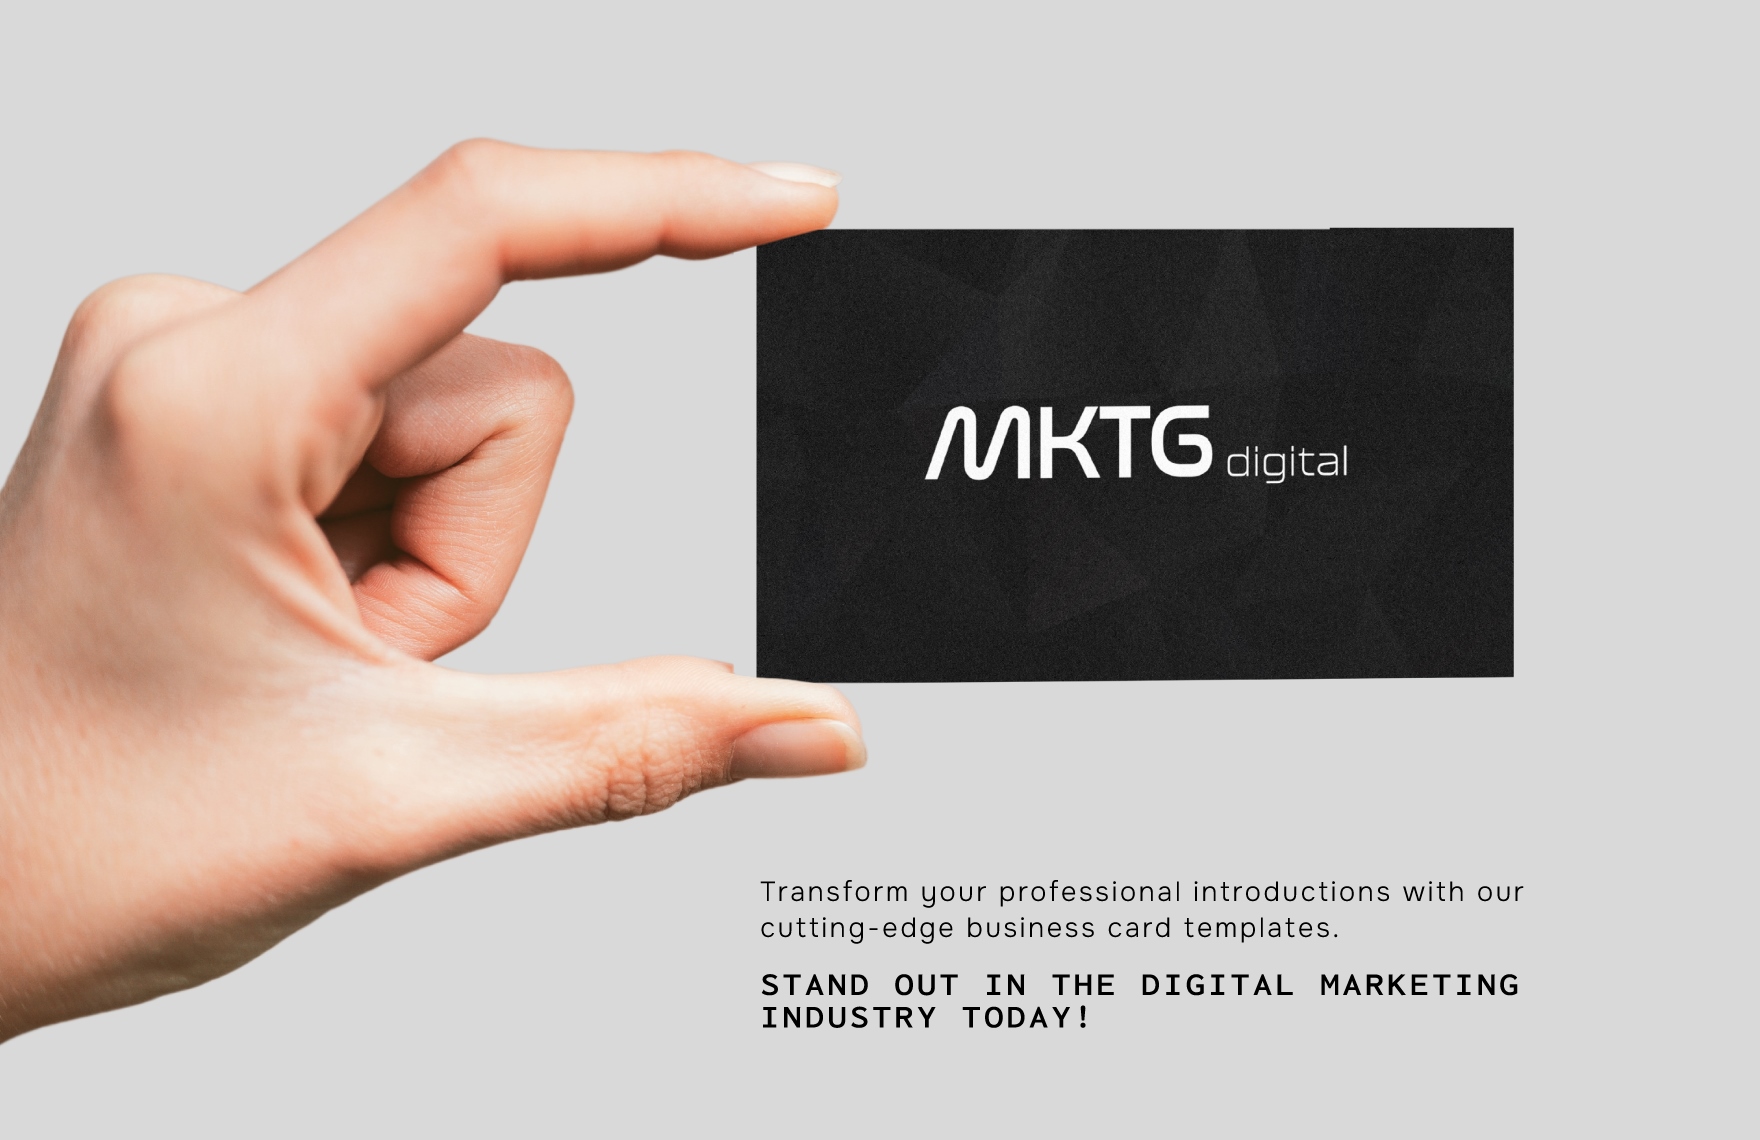 Digital Marketing Agency Minimalist Business Card Template